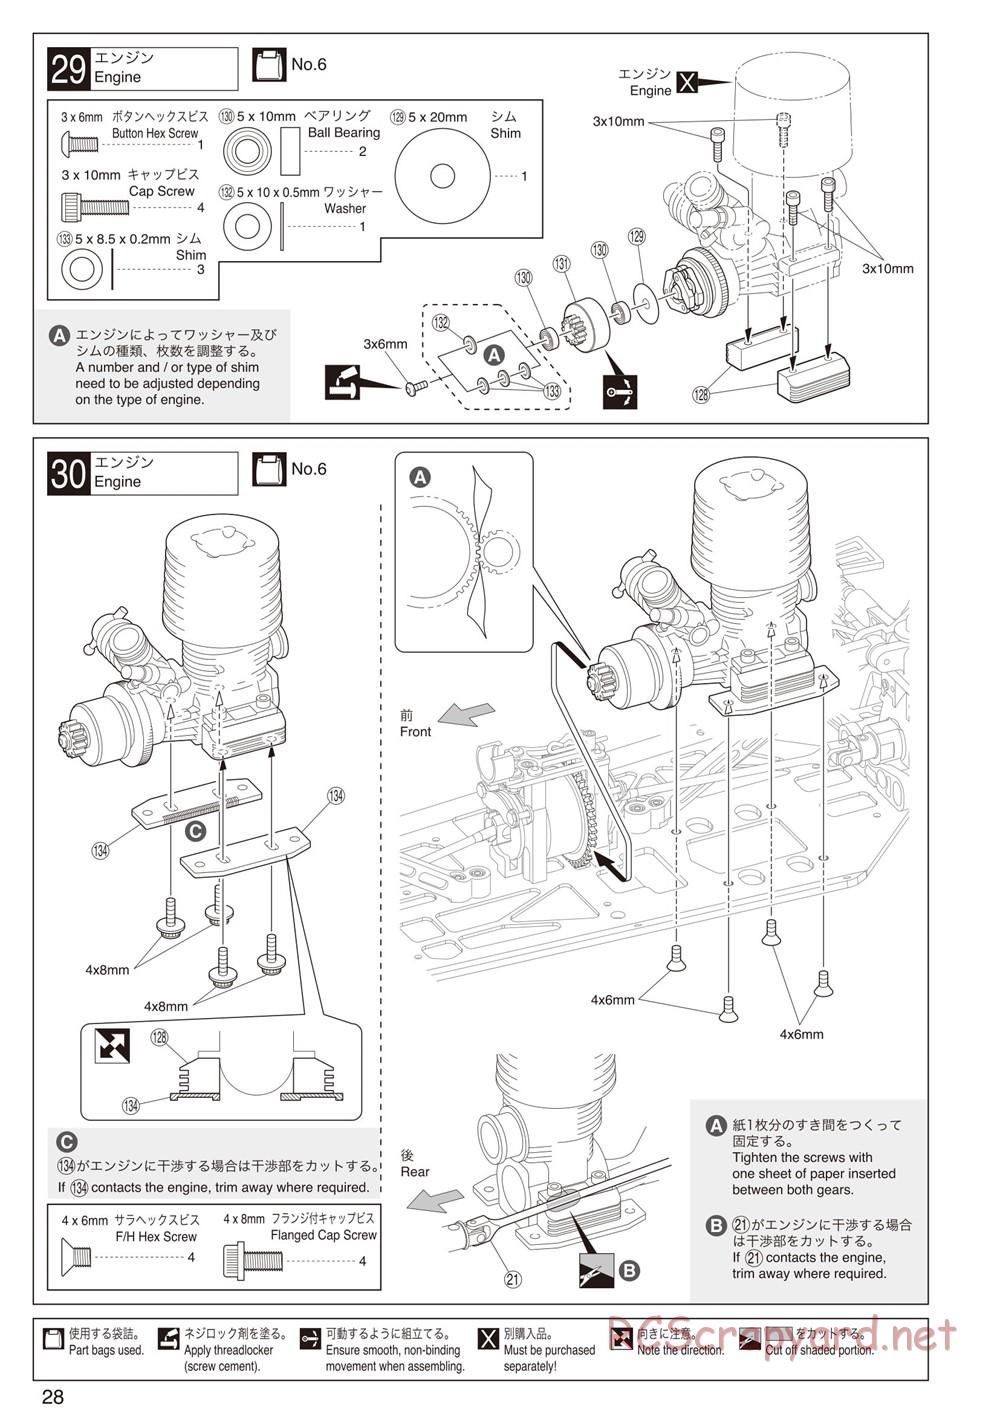 Kyosho - Inferno MP9 TKI2 - Manual - Page 28